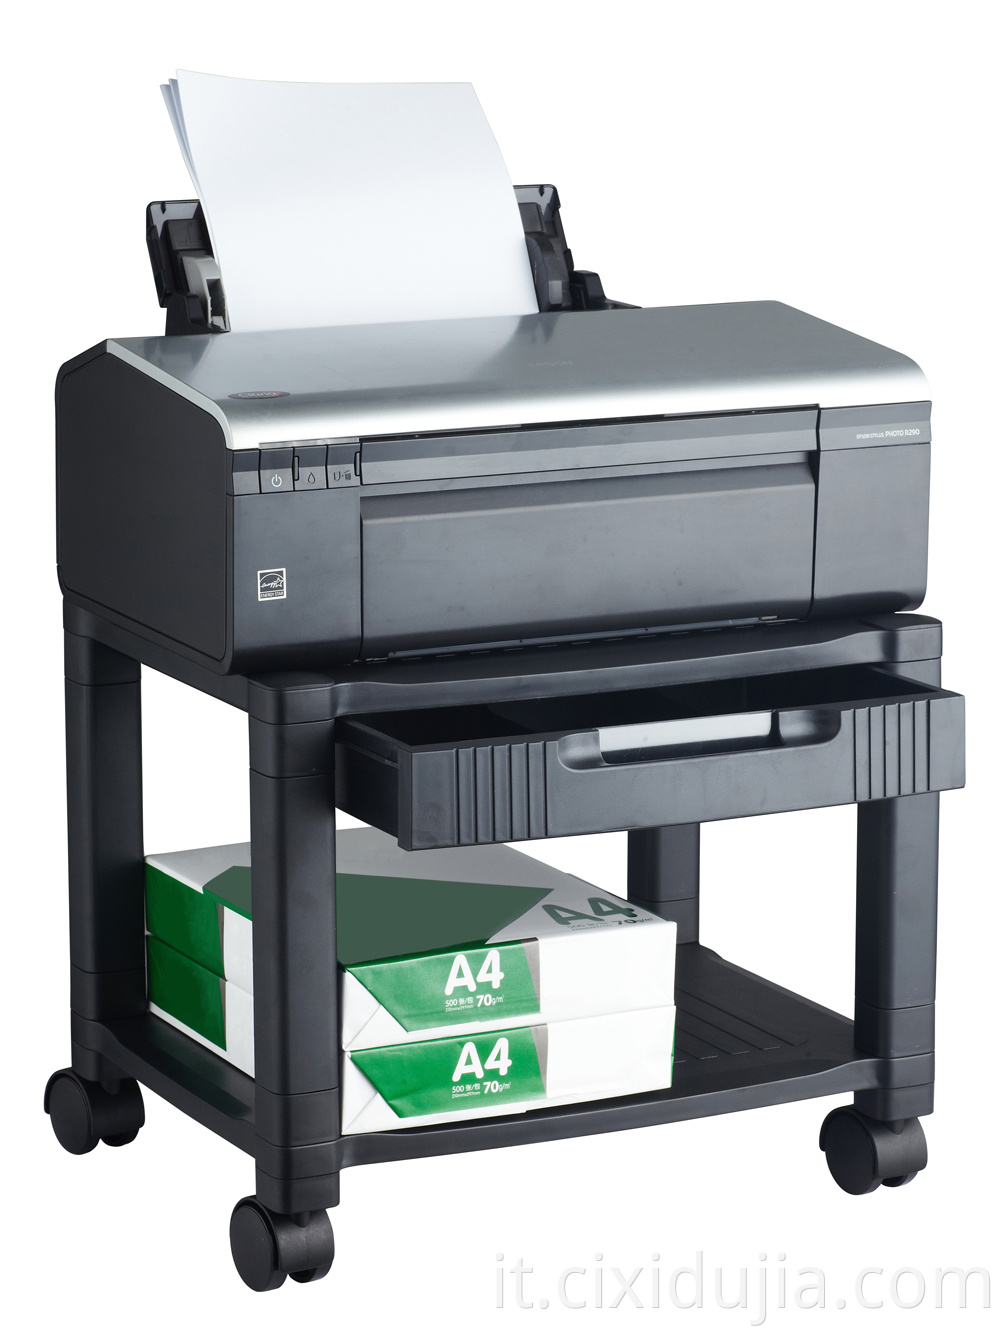 Printer Cart Machine Stand with Drawer